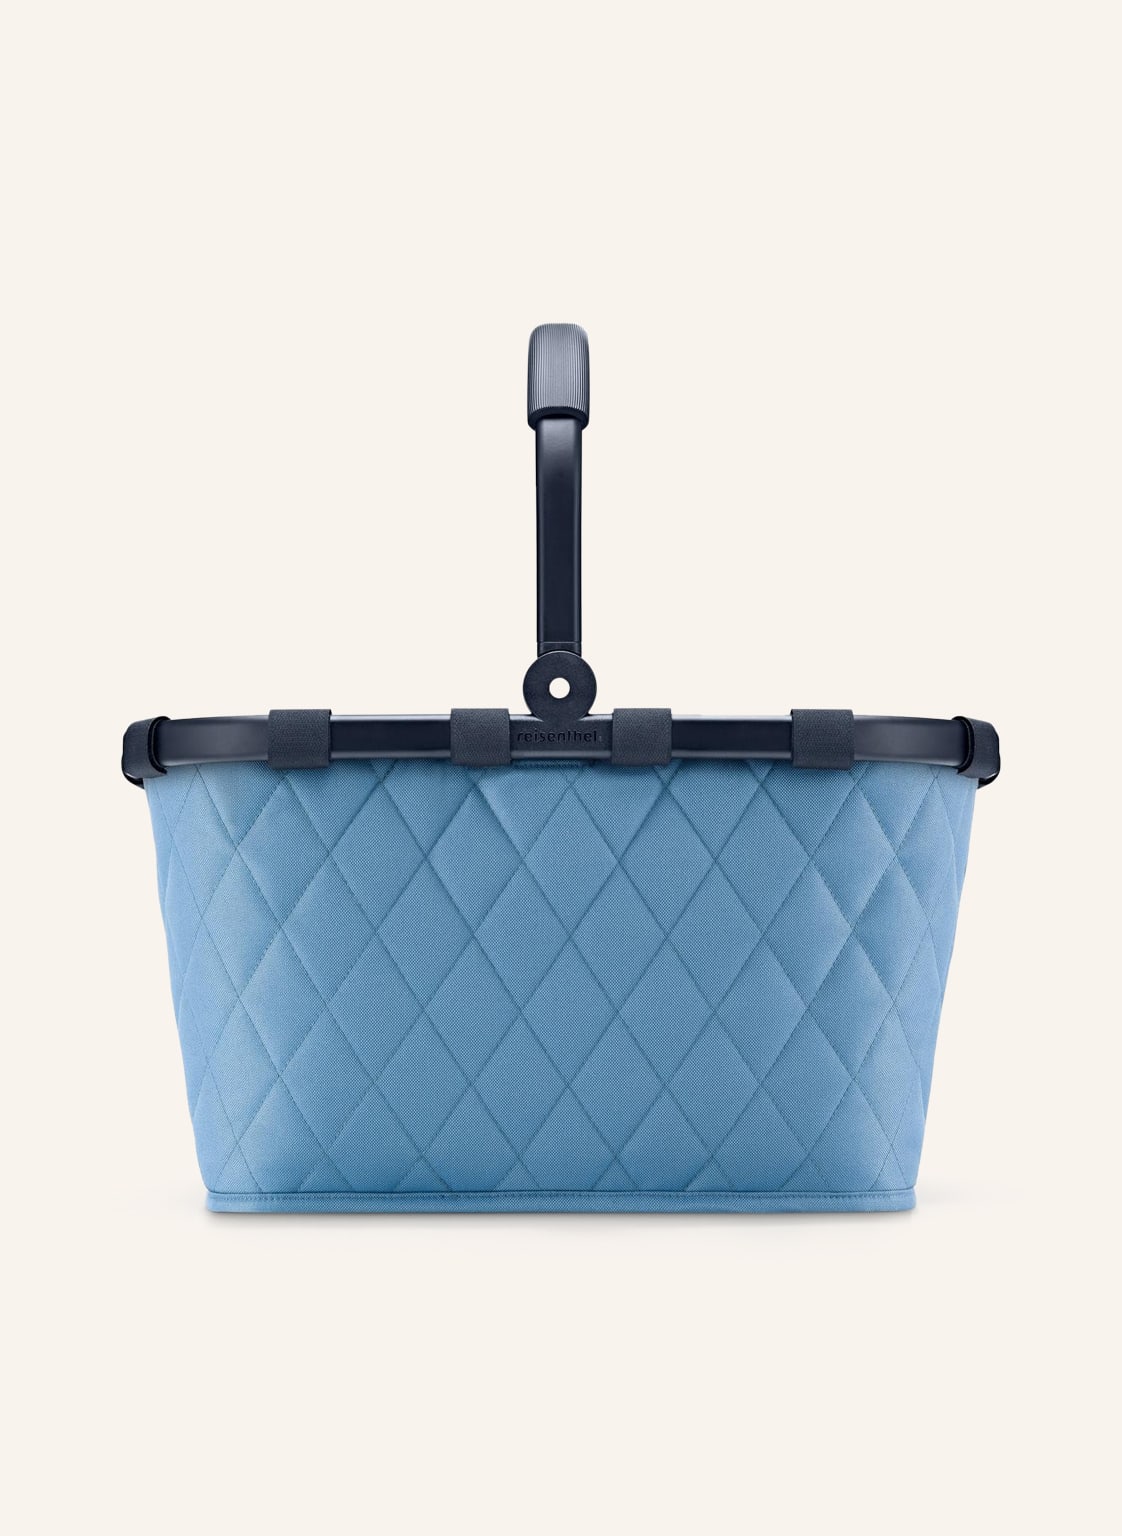 Image of Reisenthel Einkaufskorb Carrybag blau